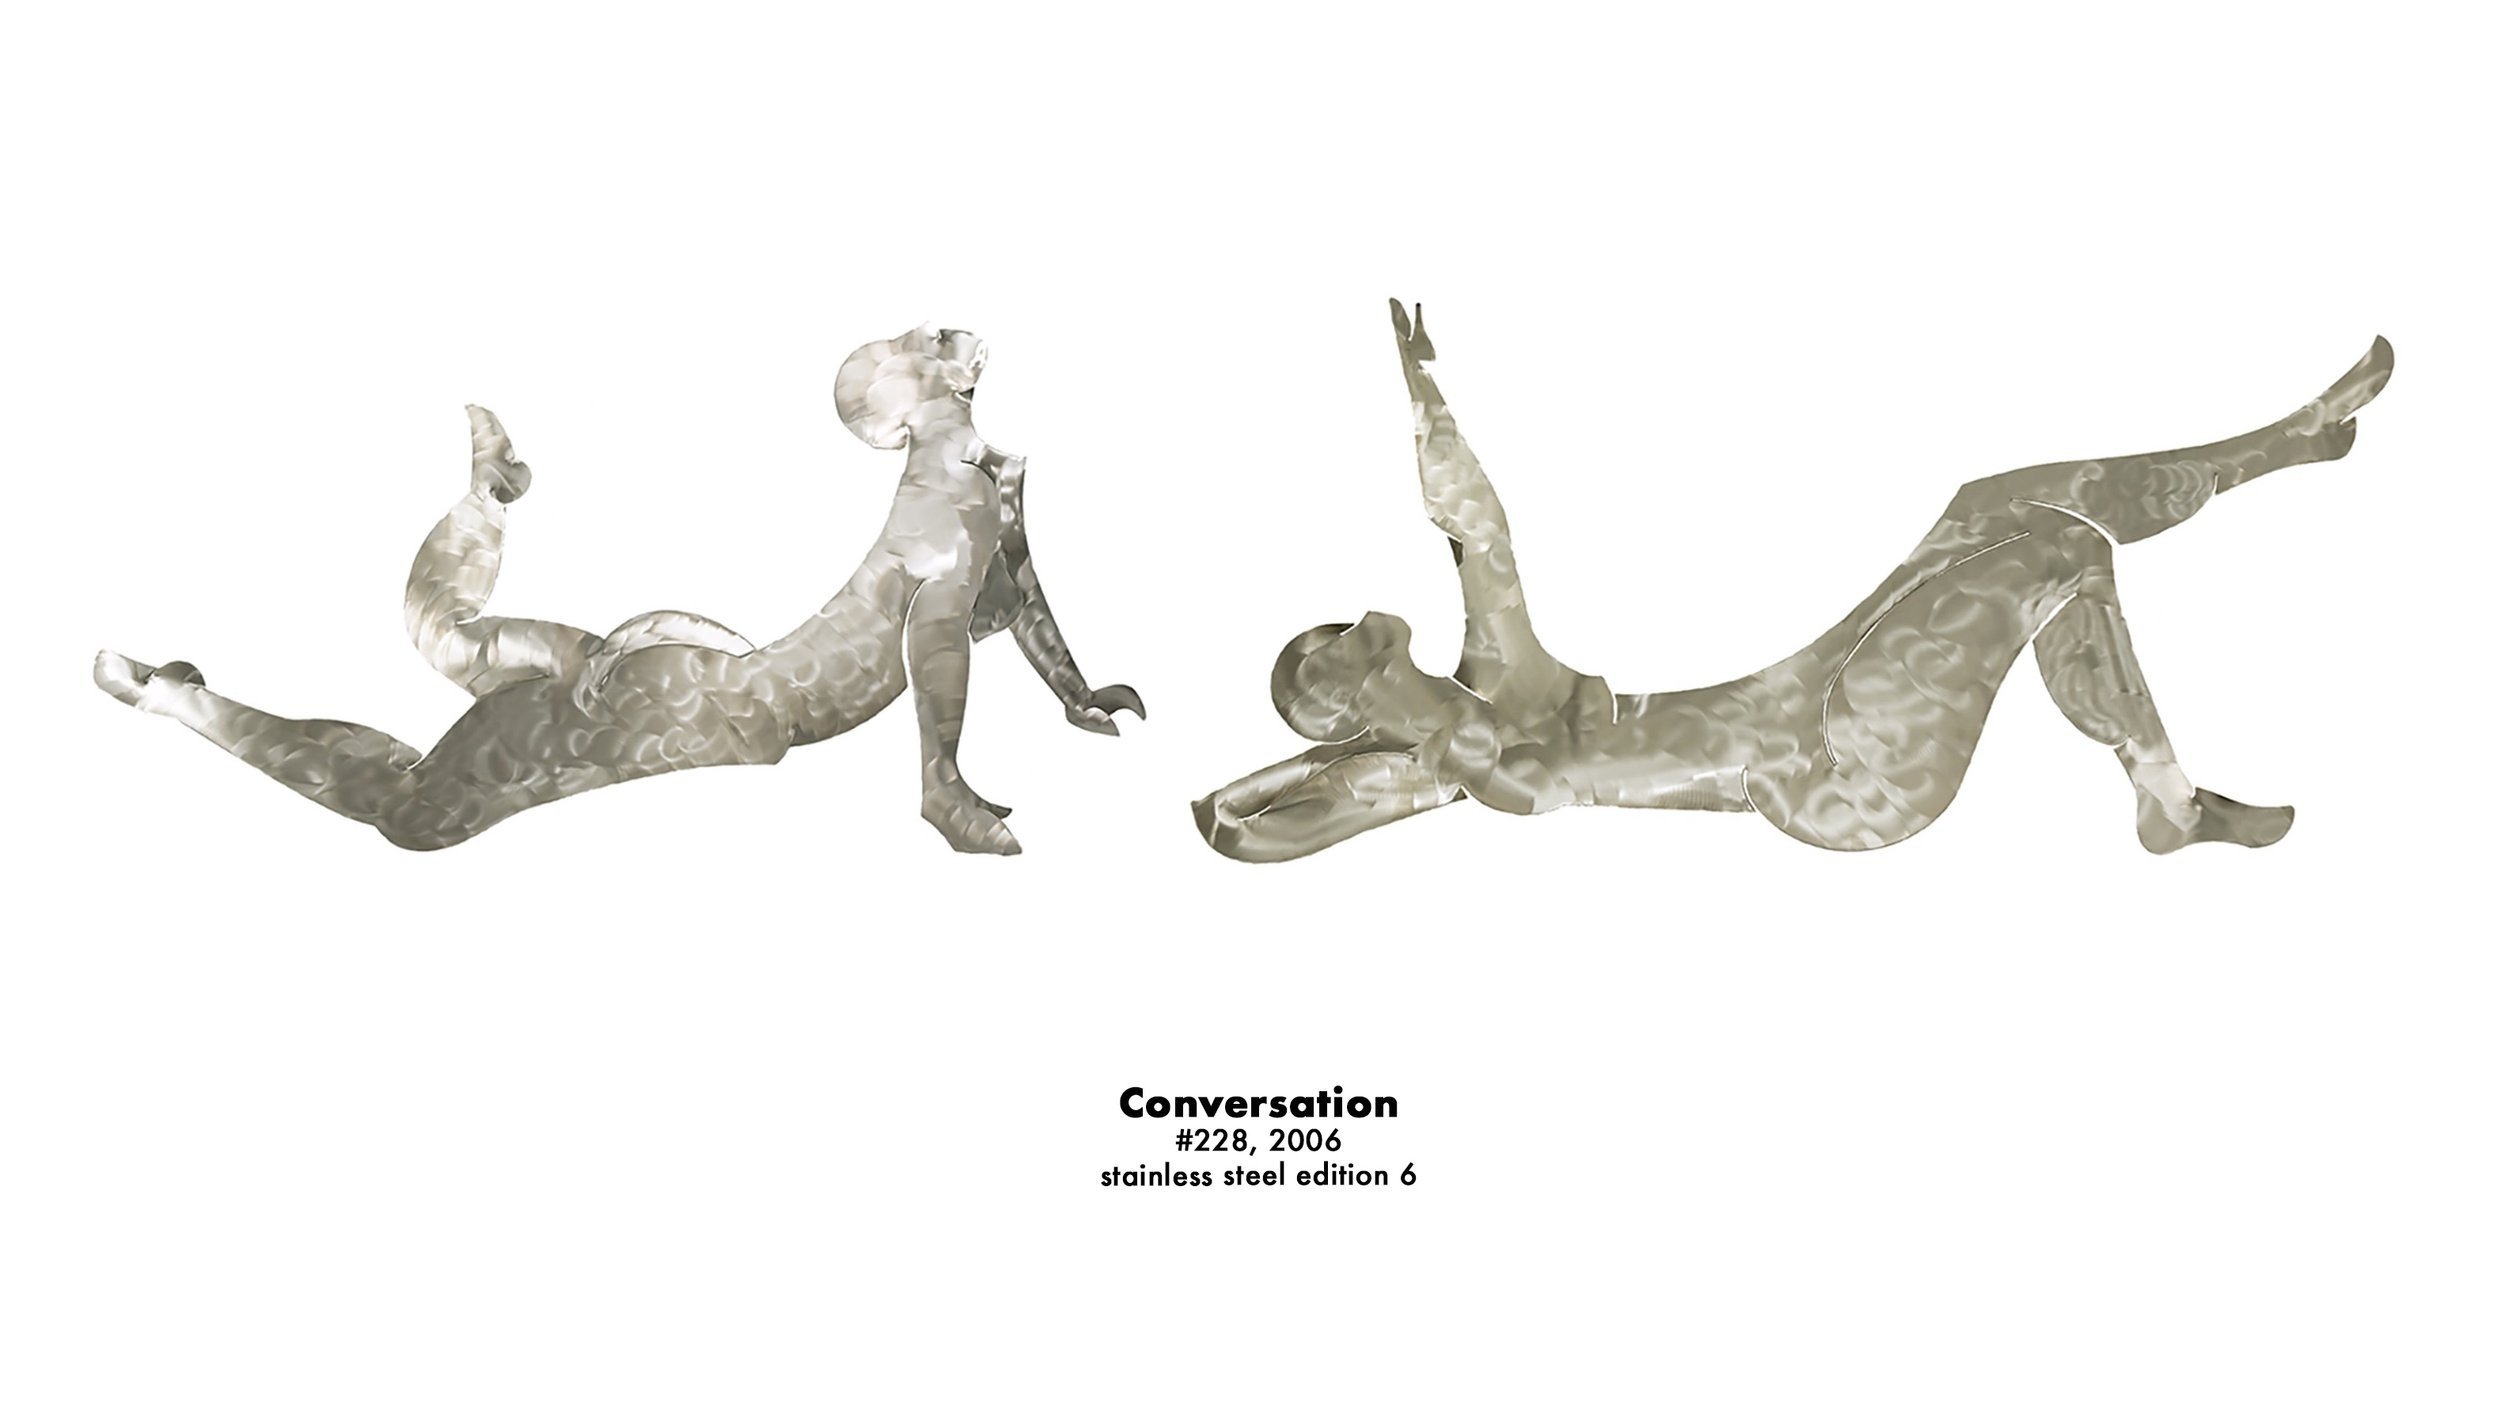 Conversation, 2006, stainless steel, #228